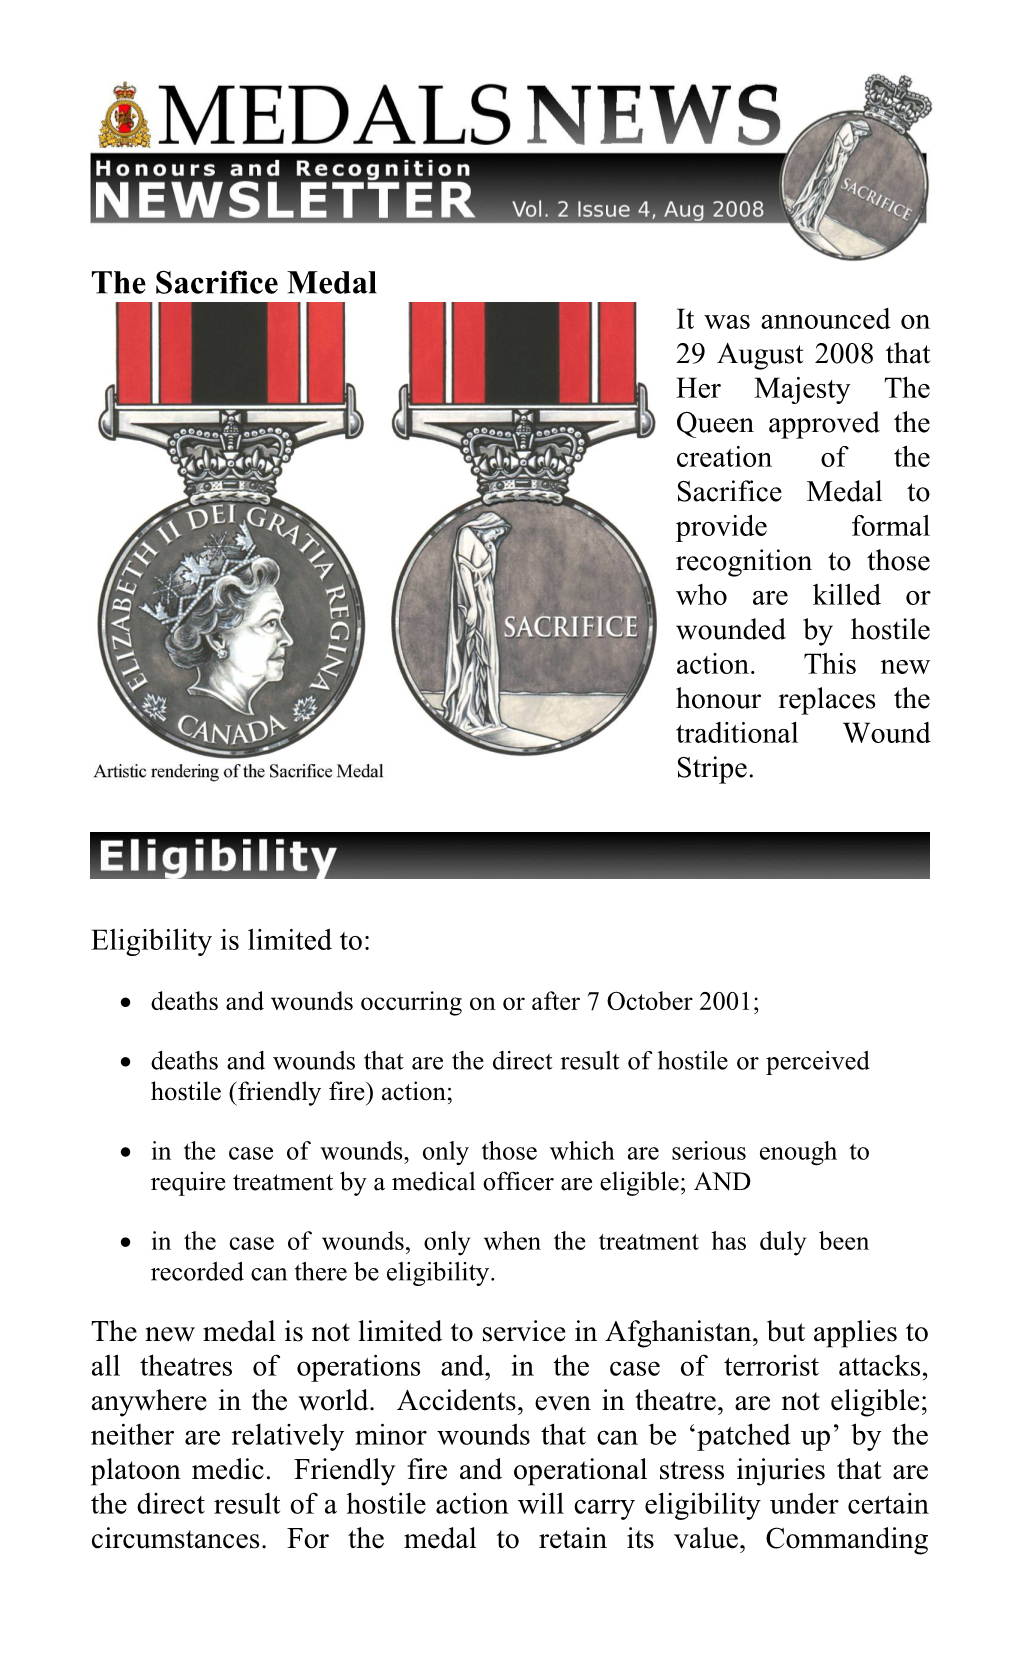 Thesacrifice Medal